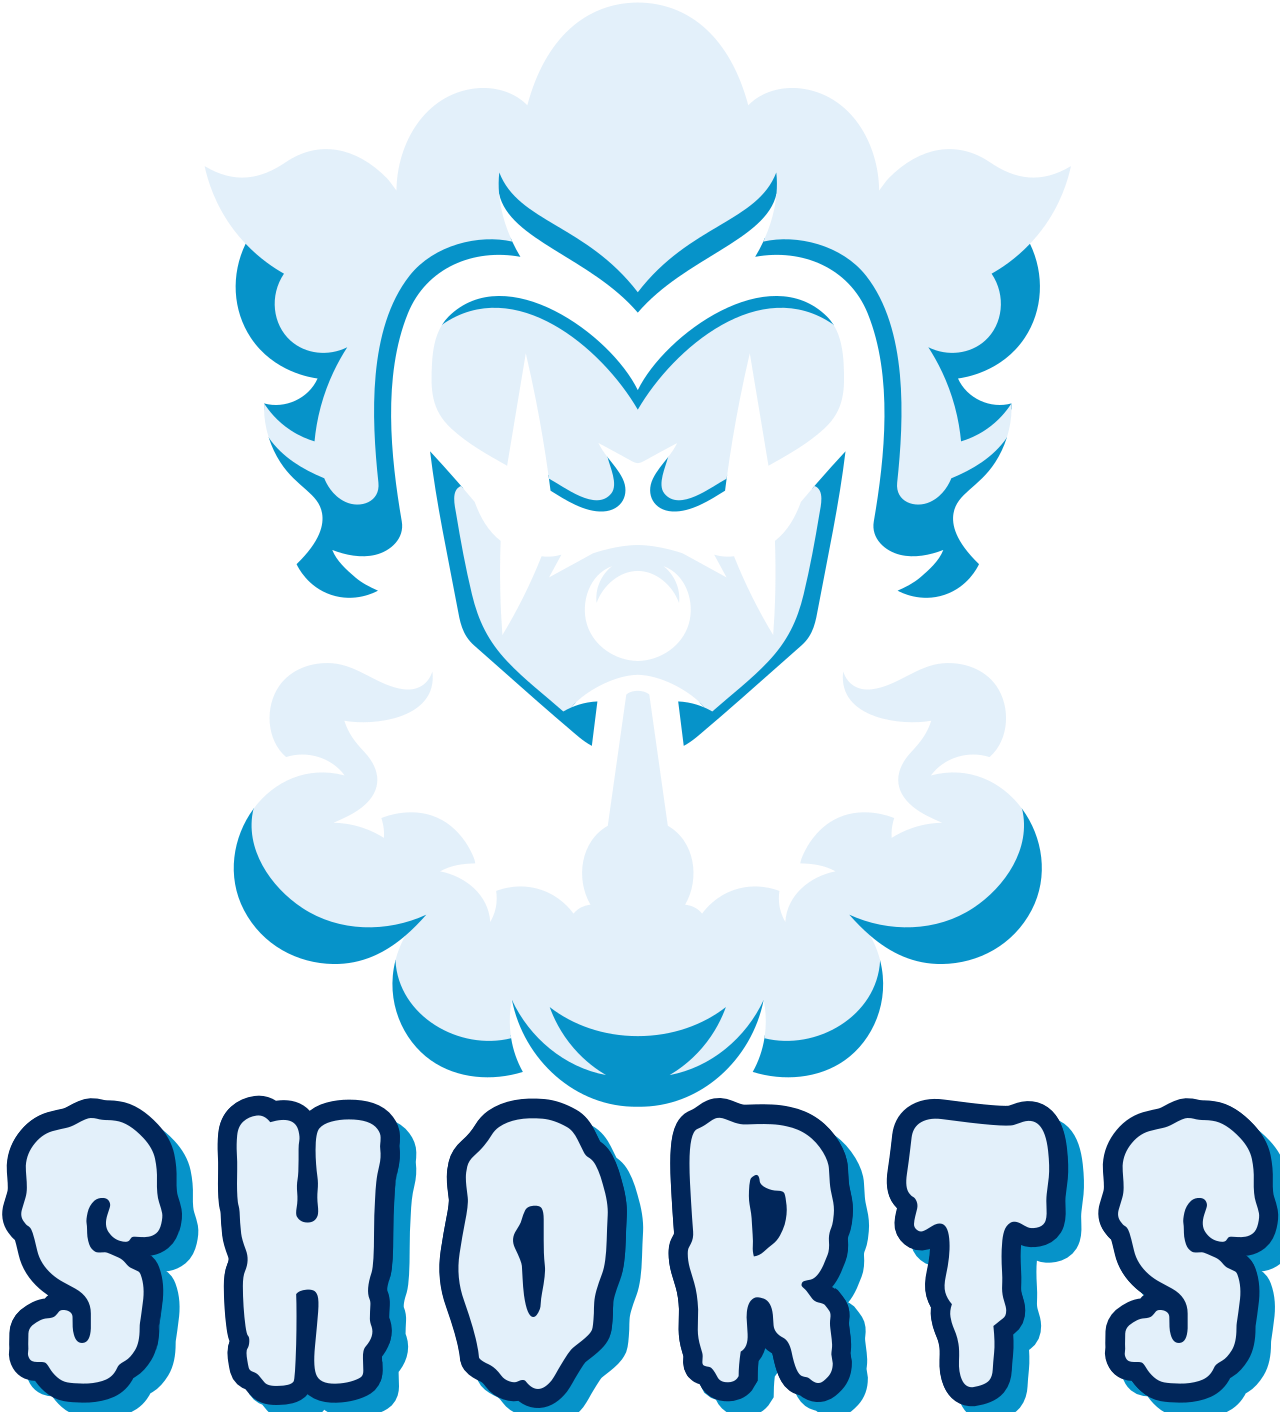 Shorts's logo